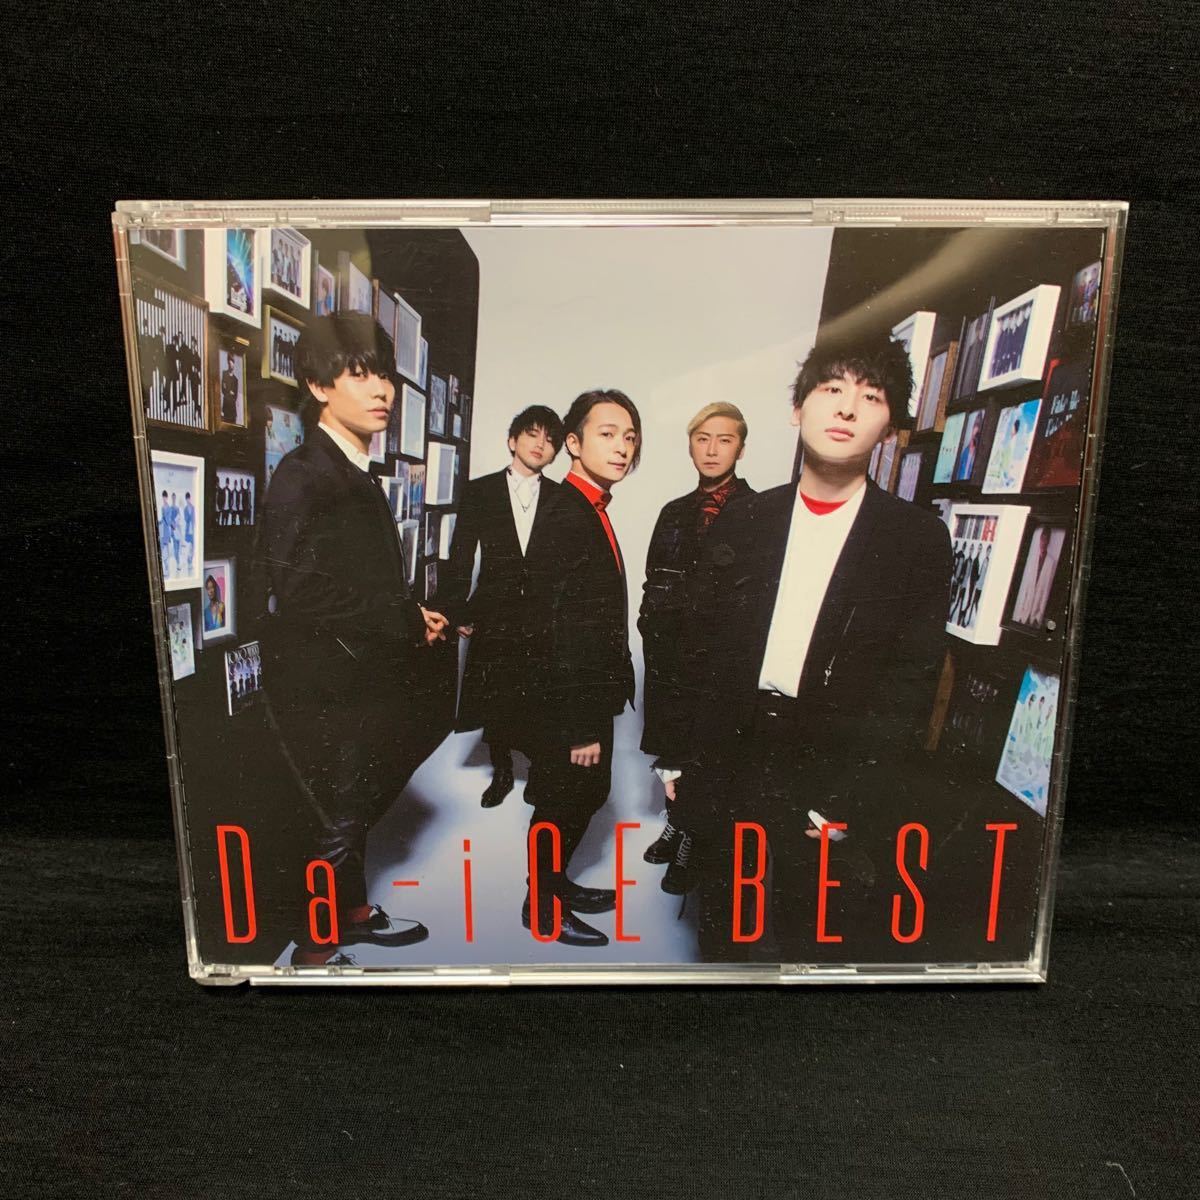 Da-iCE / BEST 初回限定盤A 2CD+Blu-ray ダイス CD ALBUM ベストアルバム 初回A 帯付き